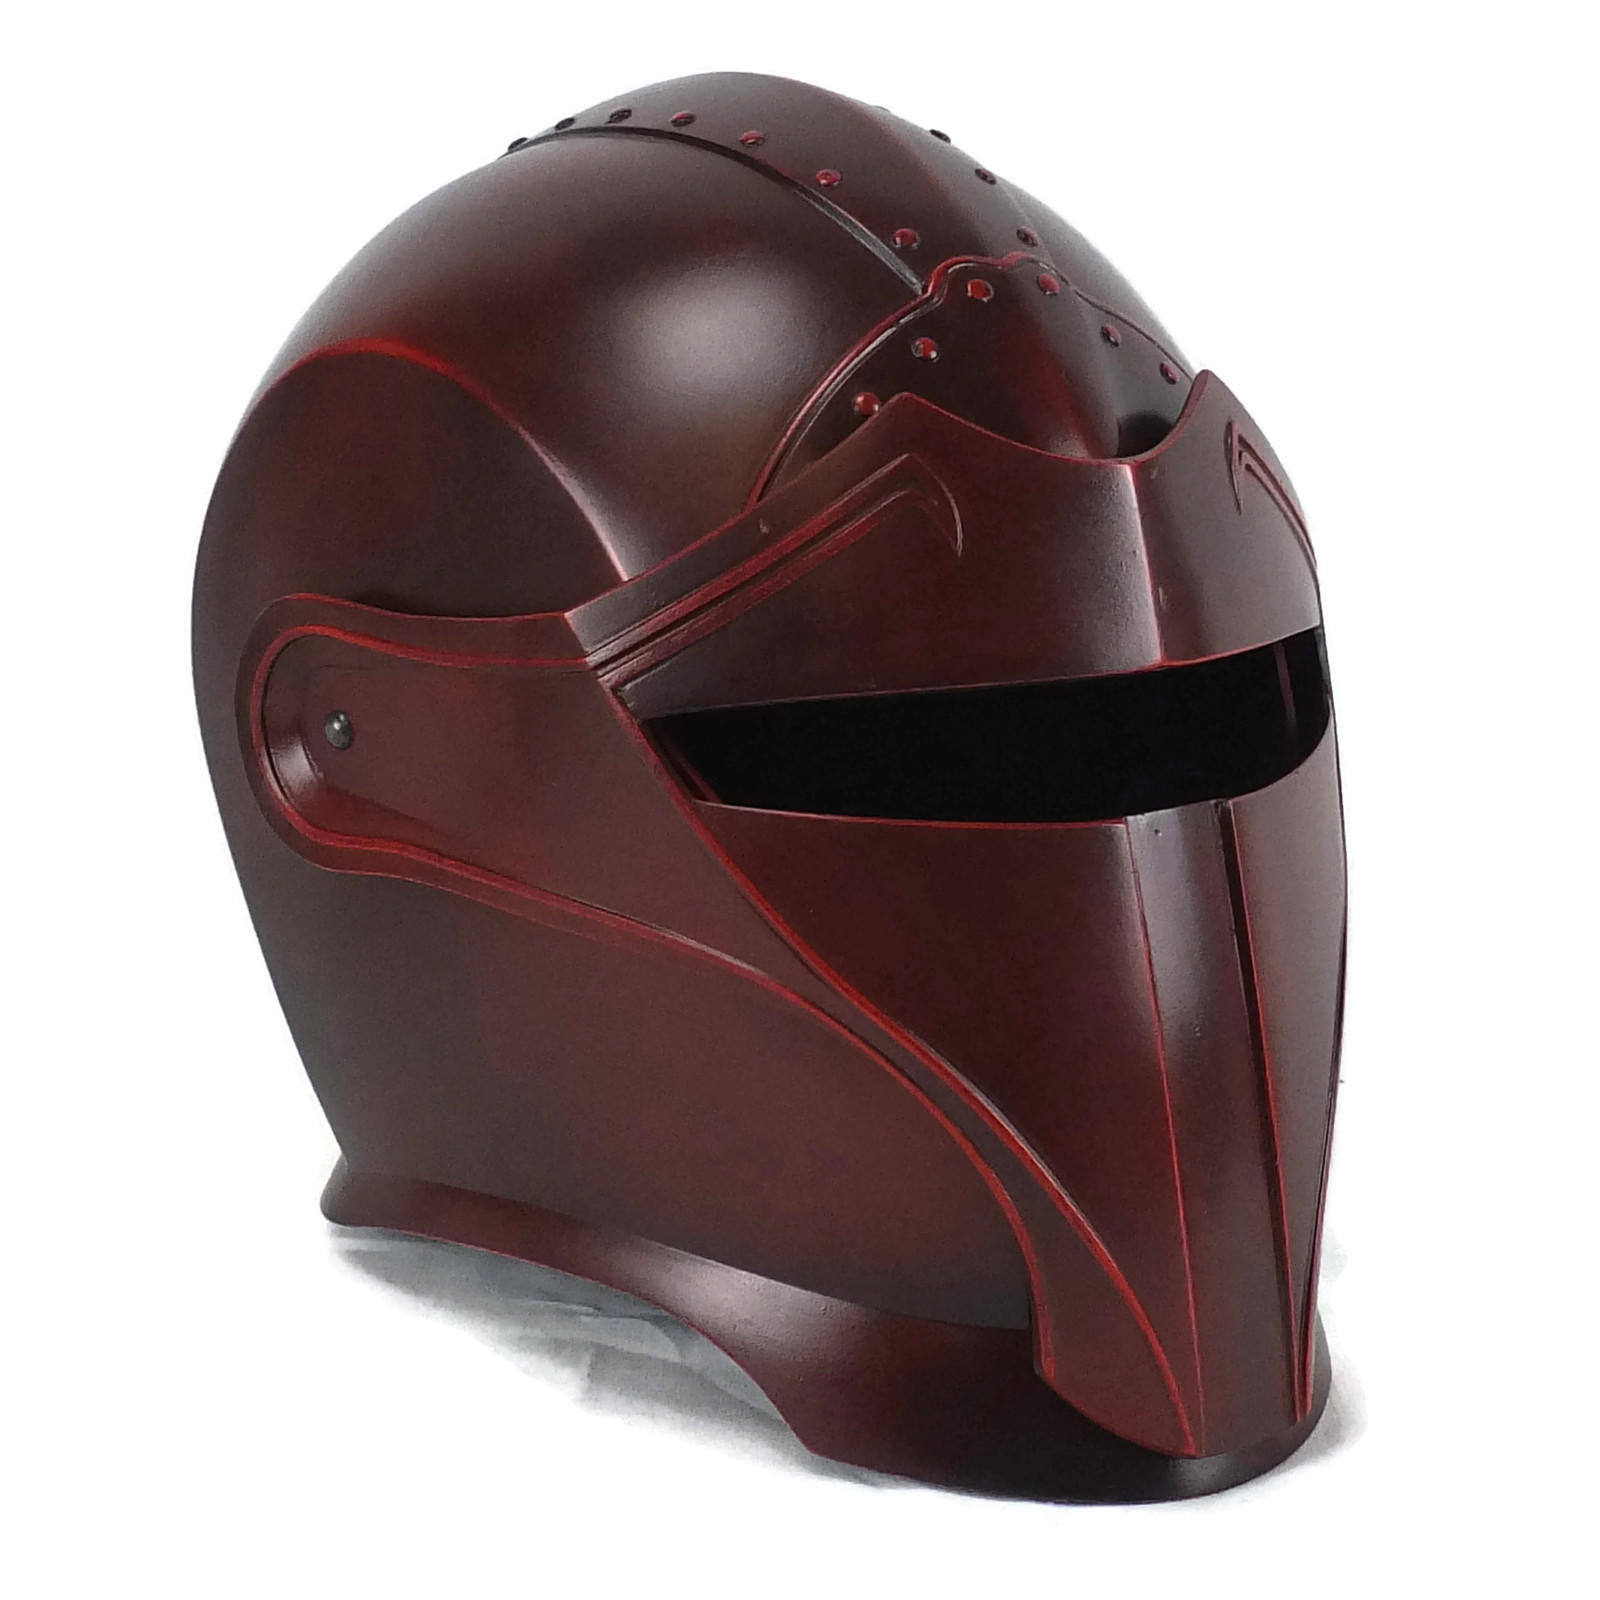 instal the new for apple Lunar Armor Helmet cs go skin